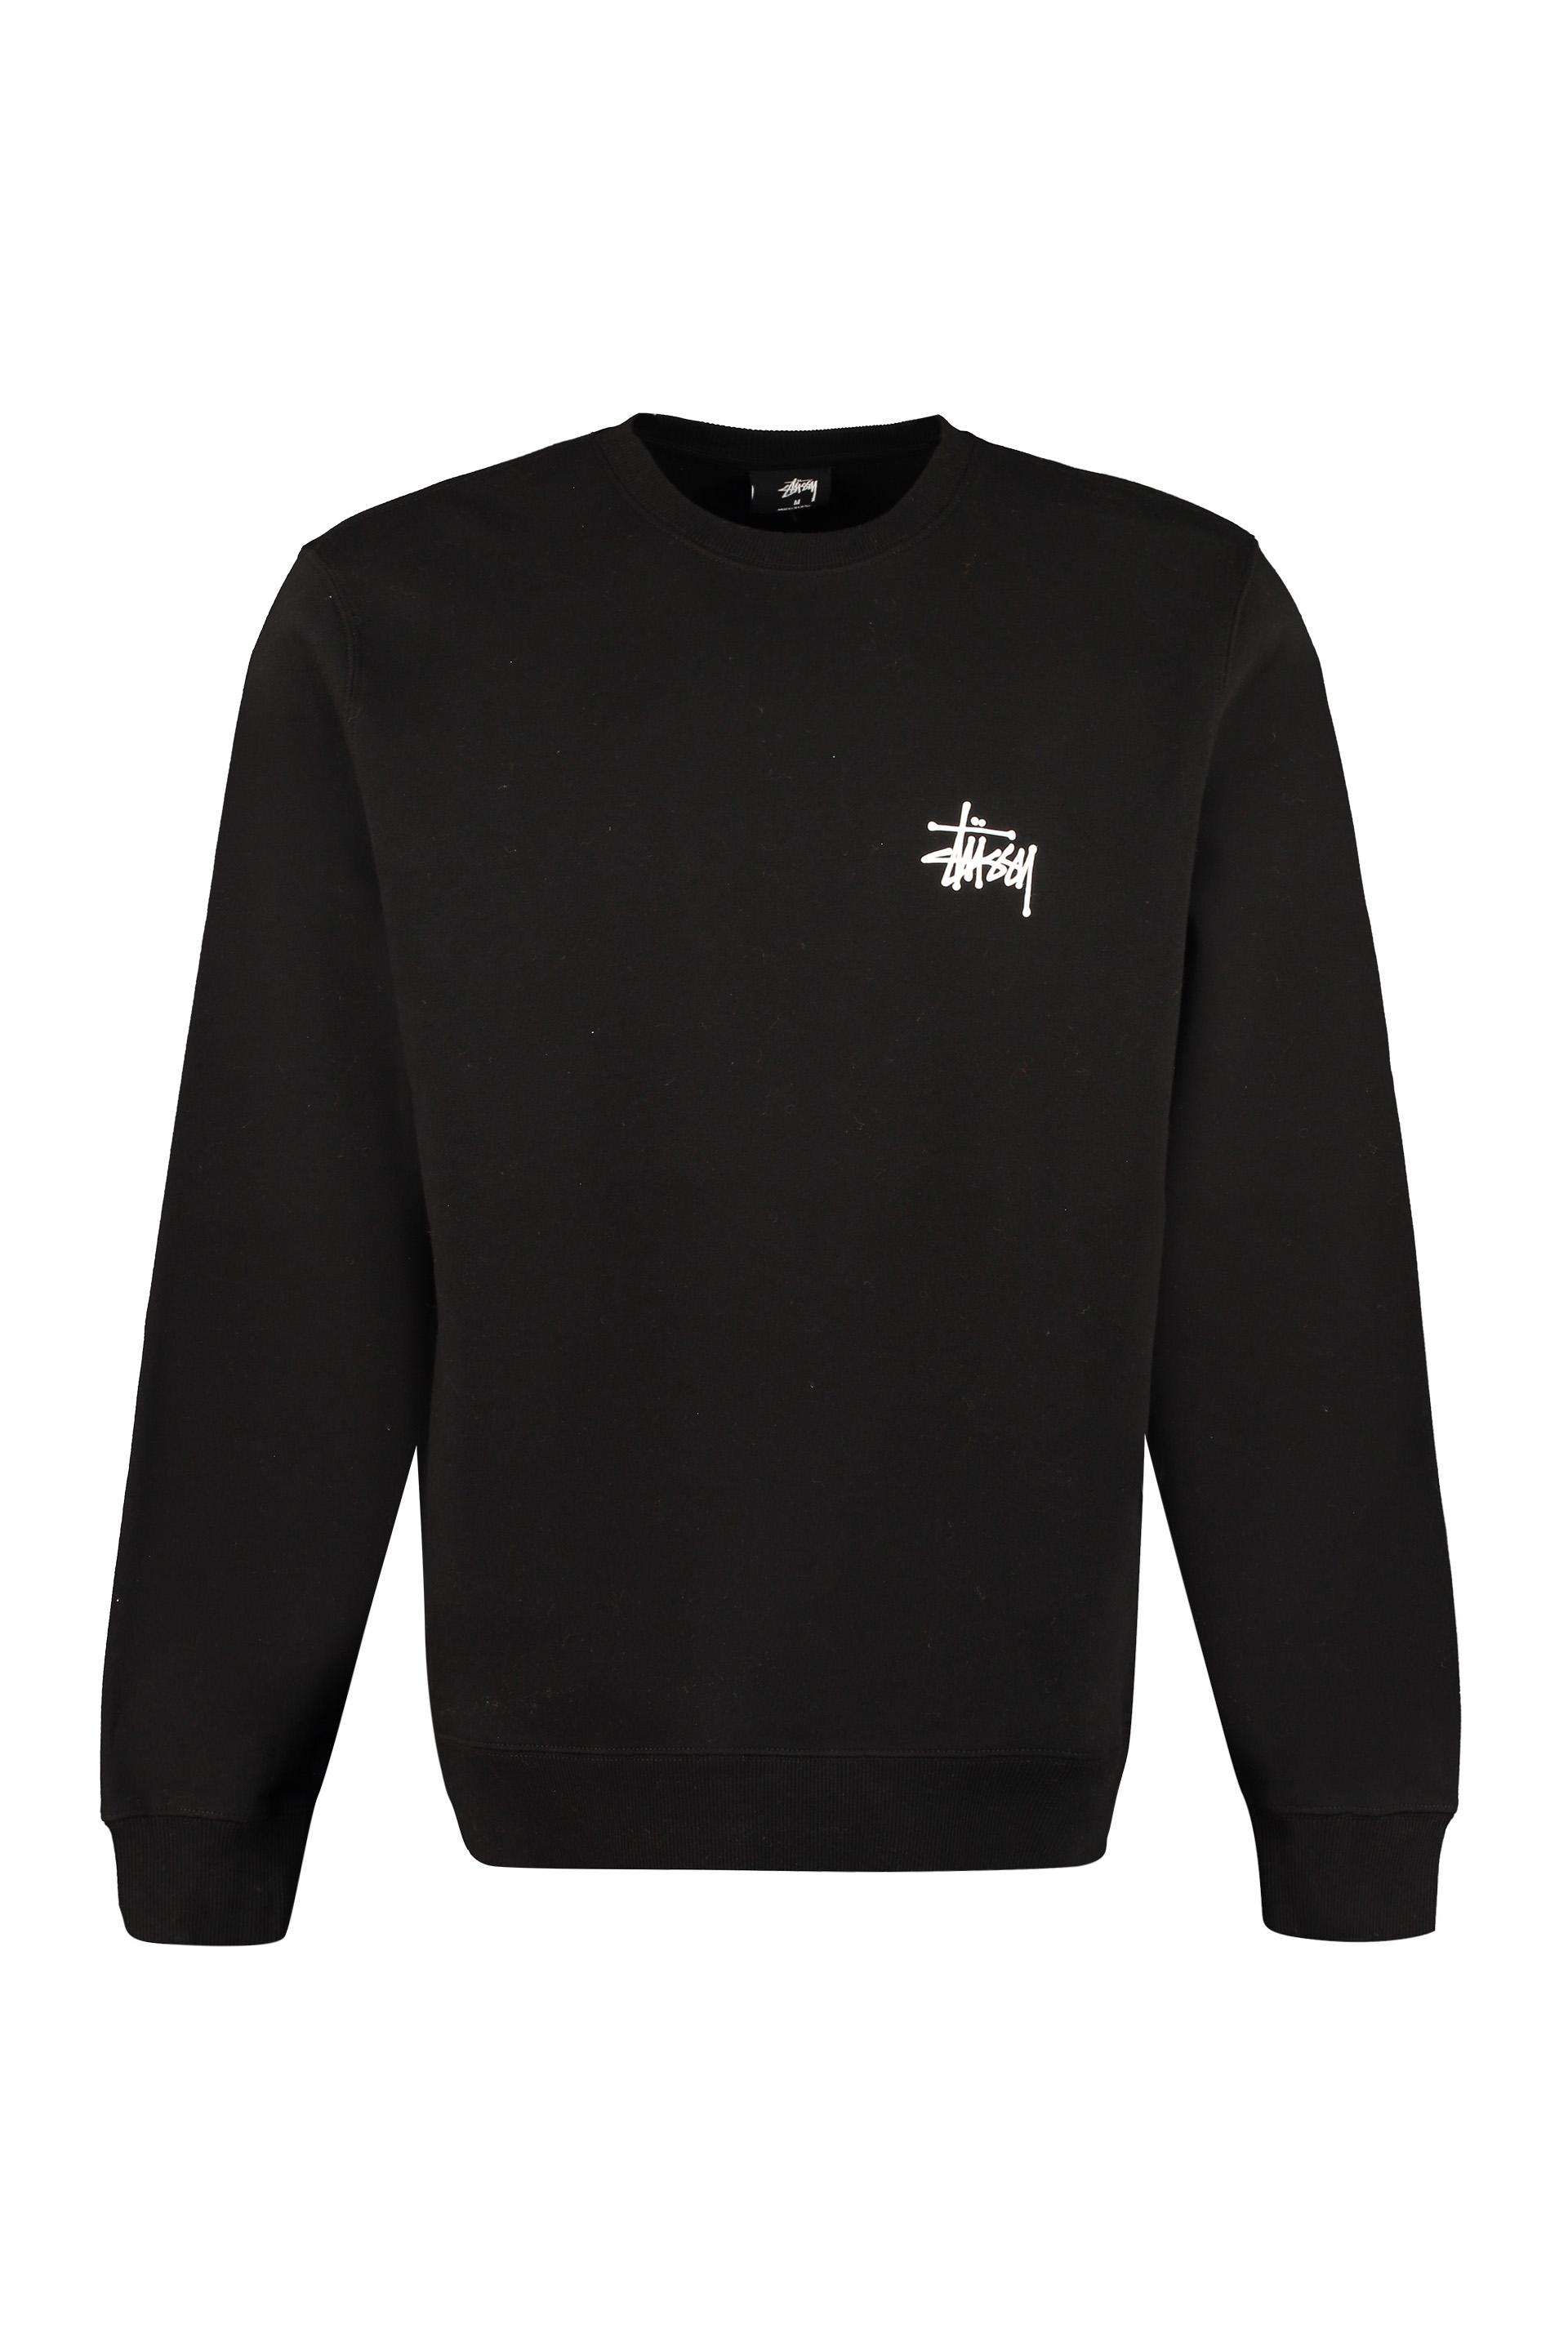 Stussy Cotton Crew-neck Sweatshirt in Black for Men - Lyst